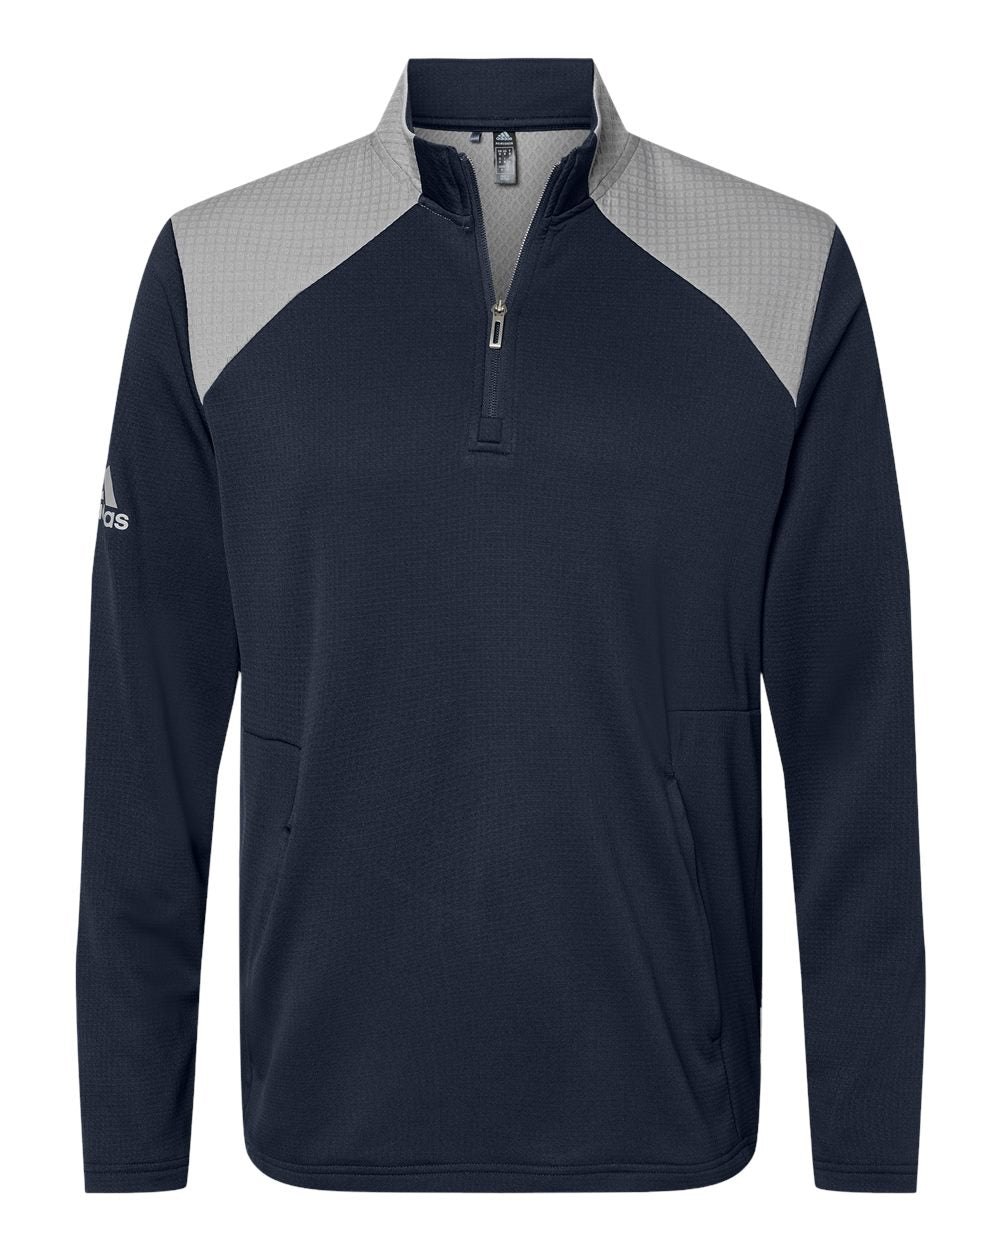 Adidas  A532 Textured Mixed Media Quarter-Zip Pullover #color_Collegiate Navy/ Grey Three